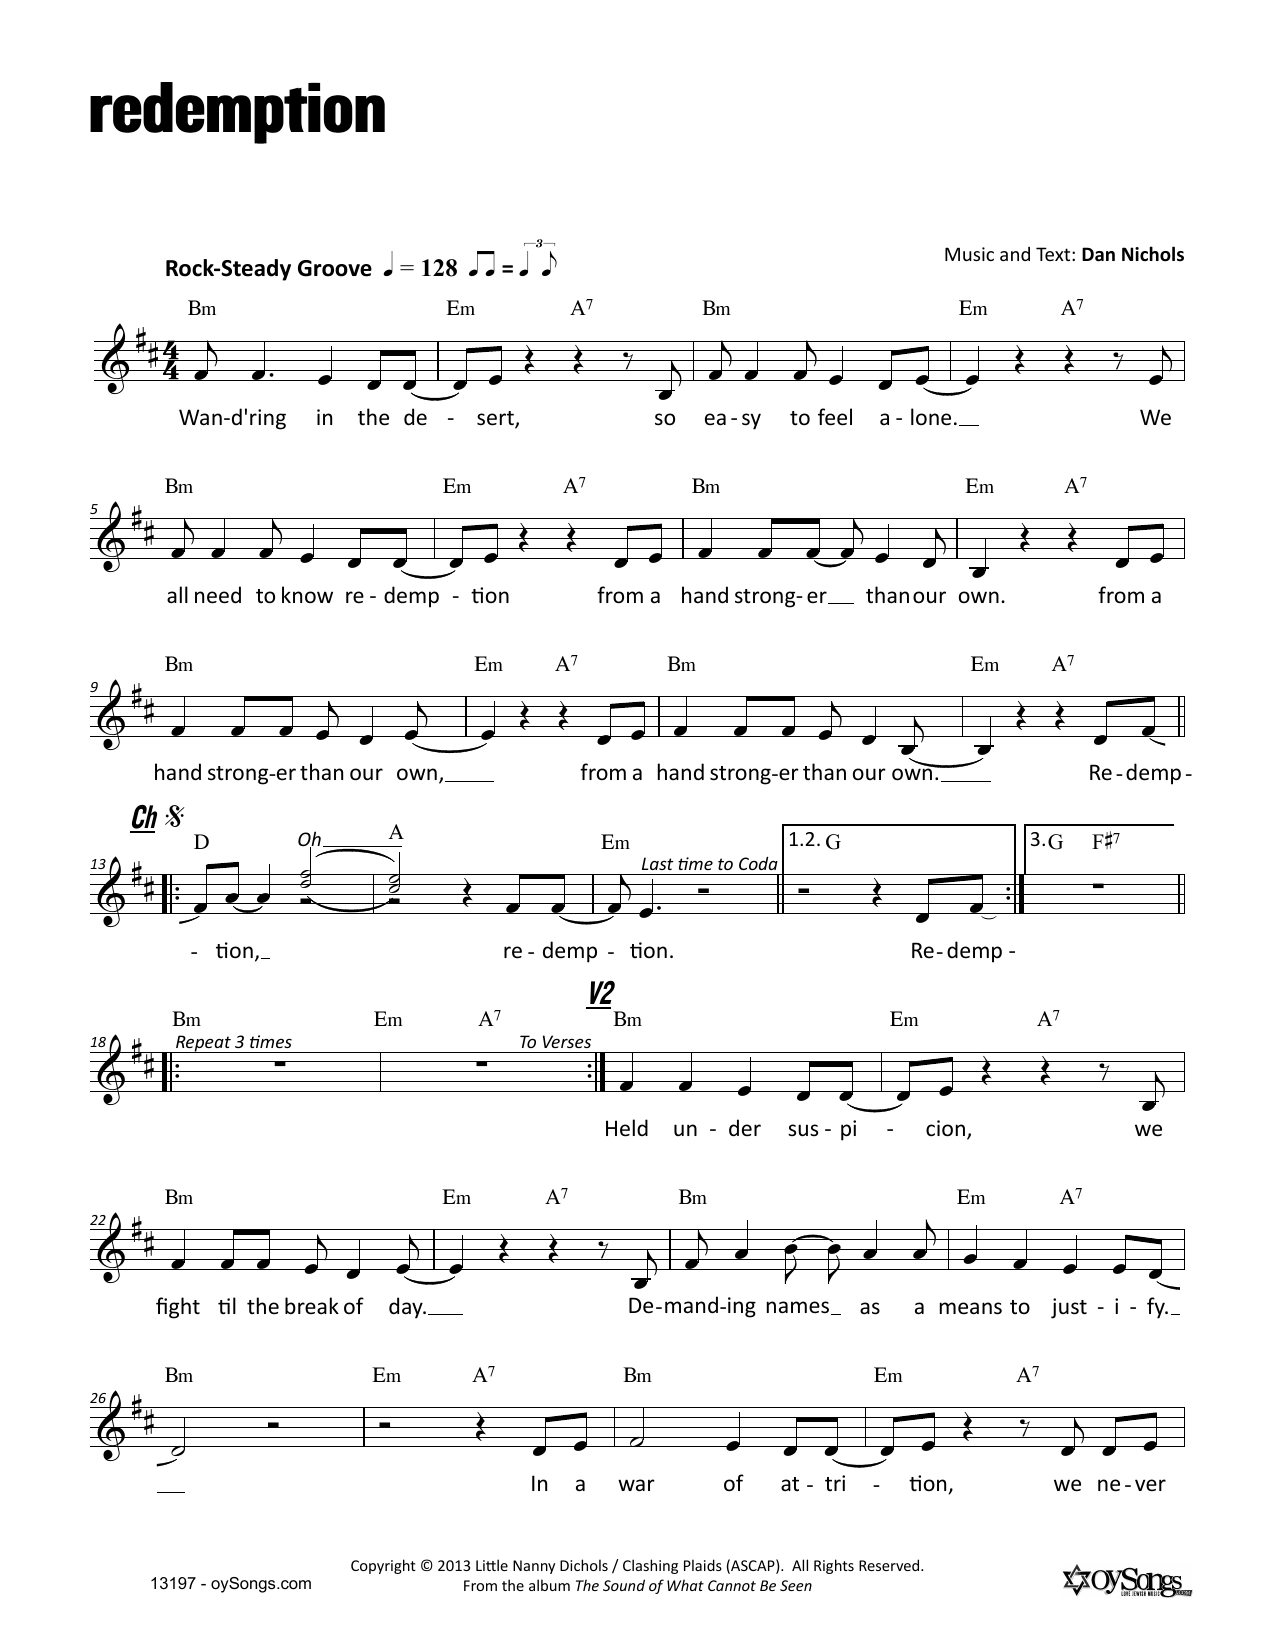 Dan Nichols Redemption Sheet Music Notes & Chords for Melody Line, Lyrics & Chords - Download or Print PDF